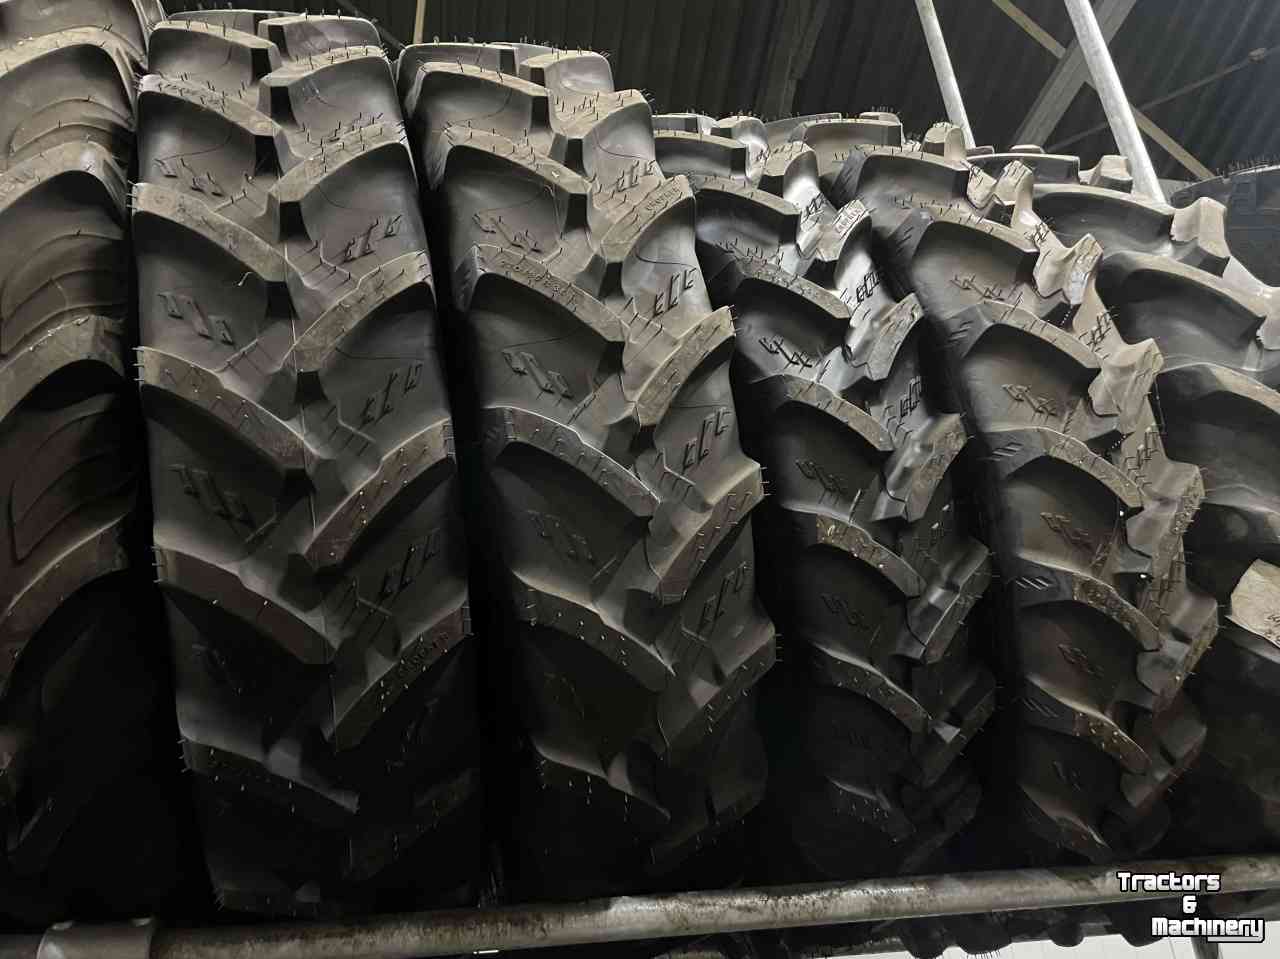 Wheels, Tyres, Rims & Dual spacers Kleber 270/95R36 KLEBER CROPKER 139D/142A8 TL